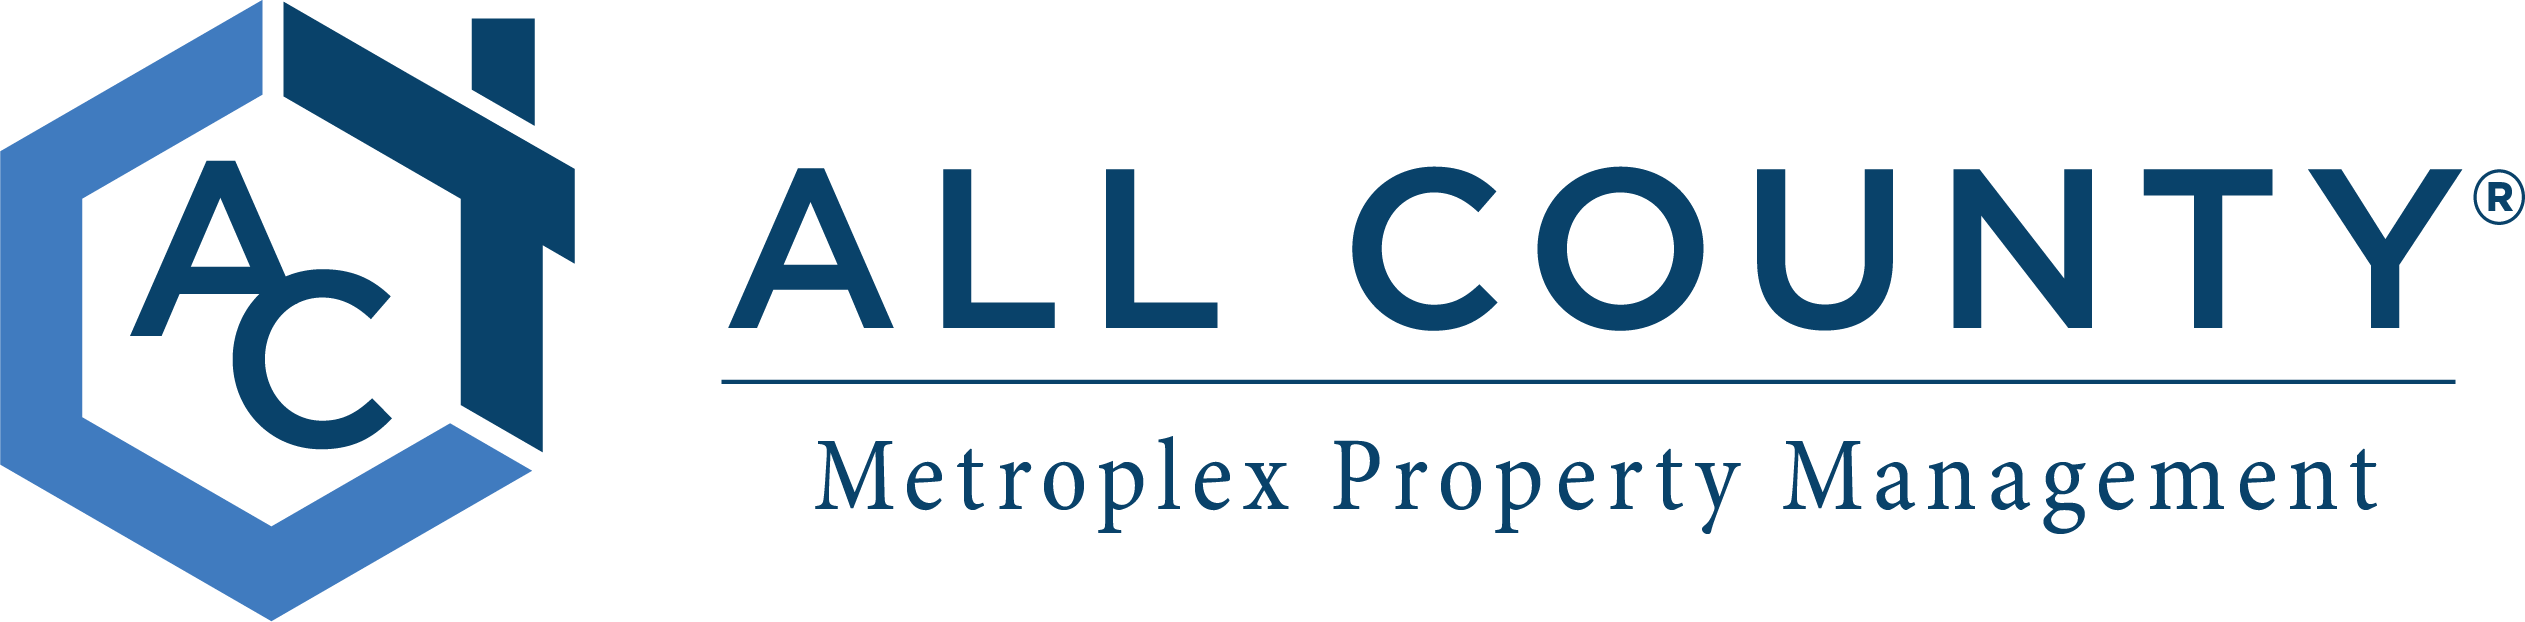 All County Metroplex logo